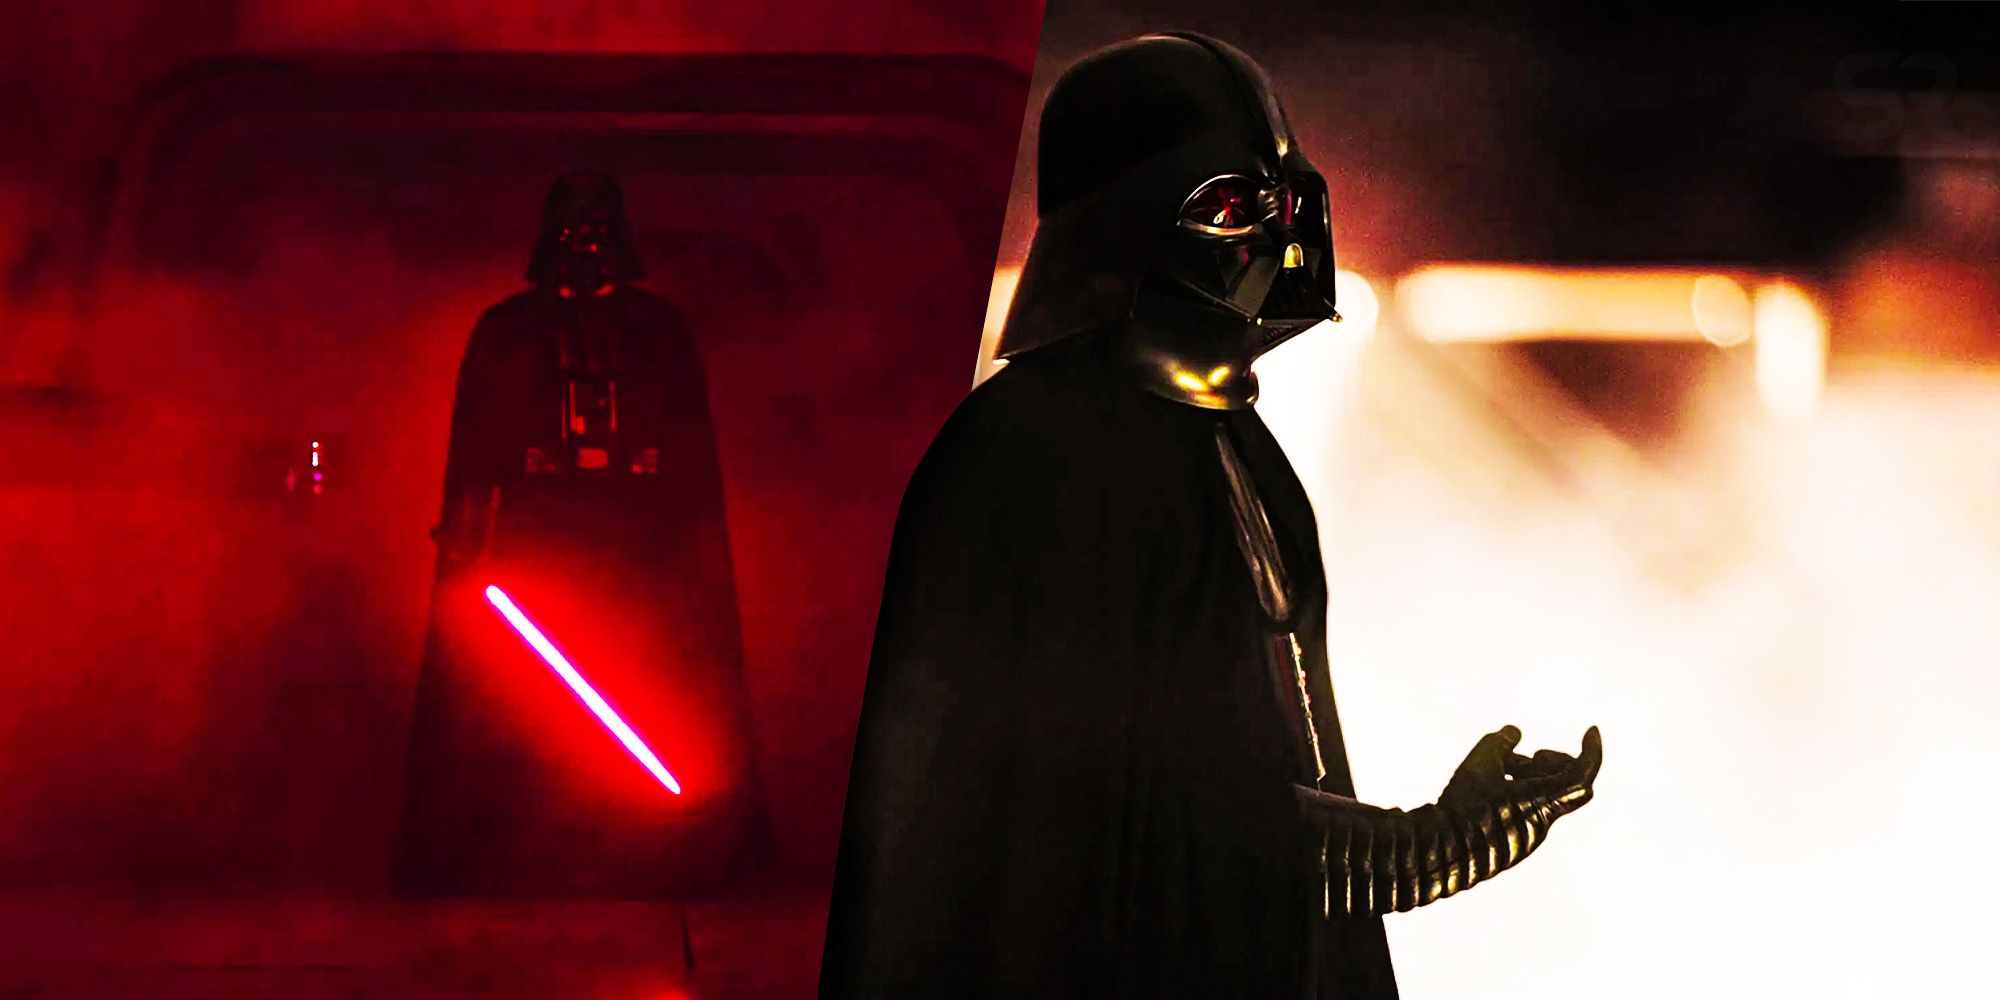 Rogue one Darth Vader most important moment Mustafar hallway scene